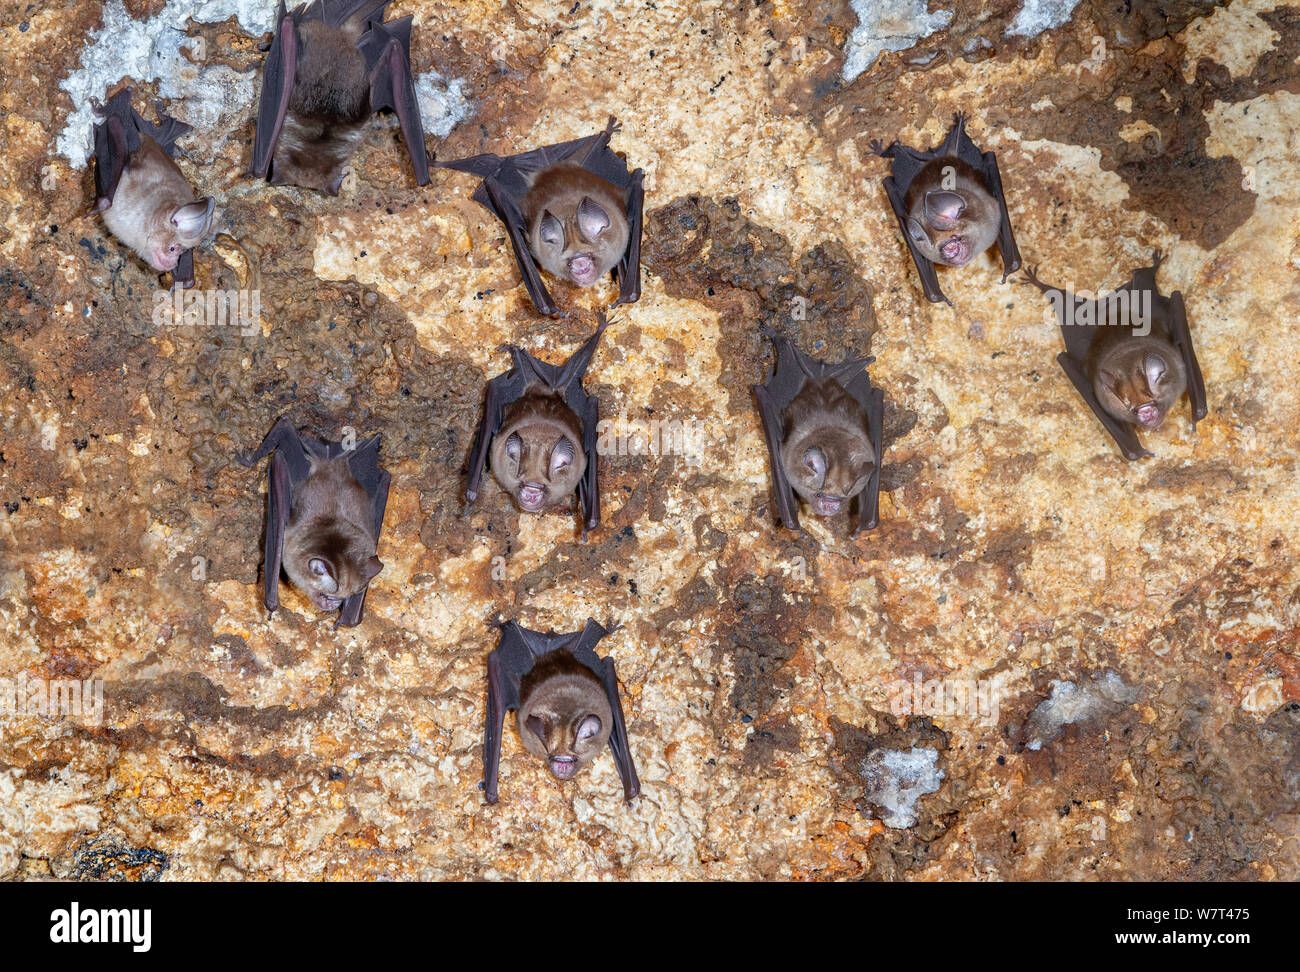 Sundevall's roundleaf bat (Hipposideros caffer) colony in cave, eastern Kenya. Stock Photo